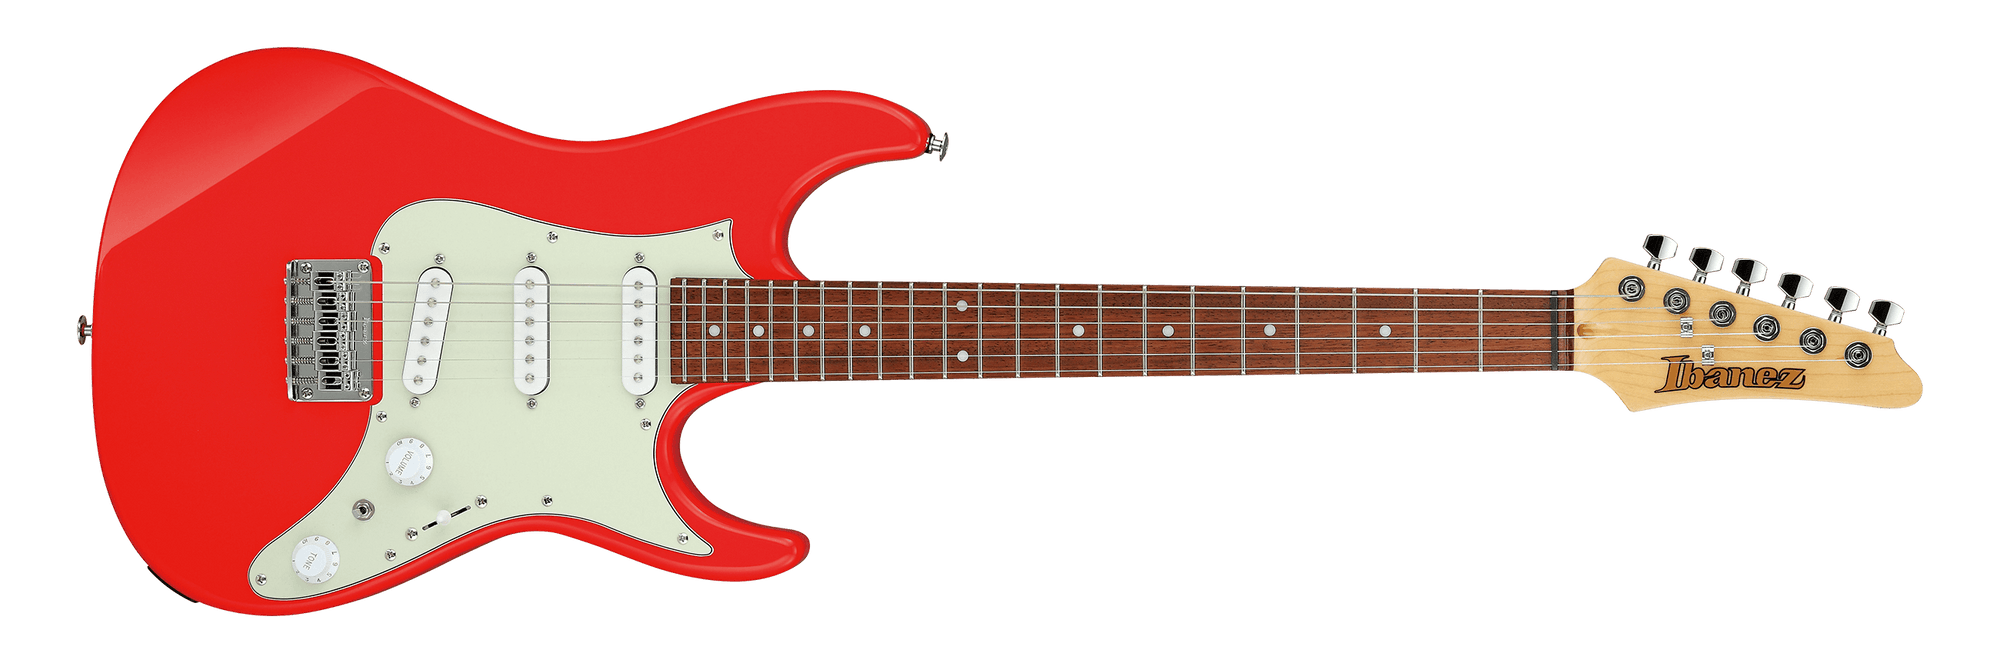 Ibanez AZES31VM Standard 6-String RH Electric Guitar in Vermilion